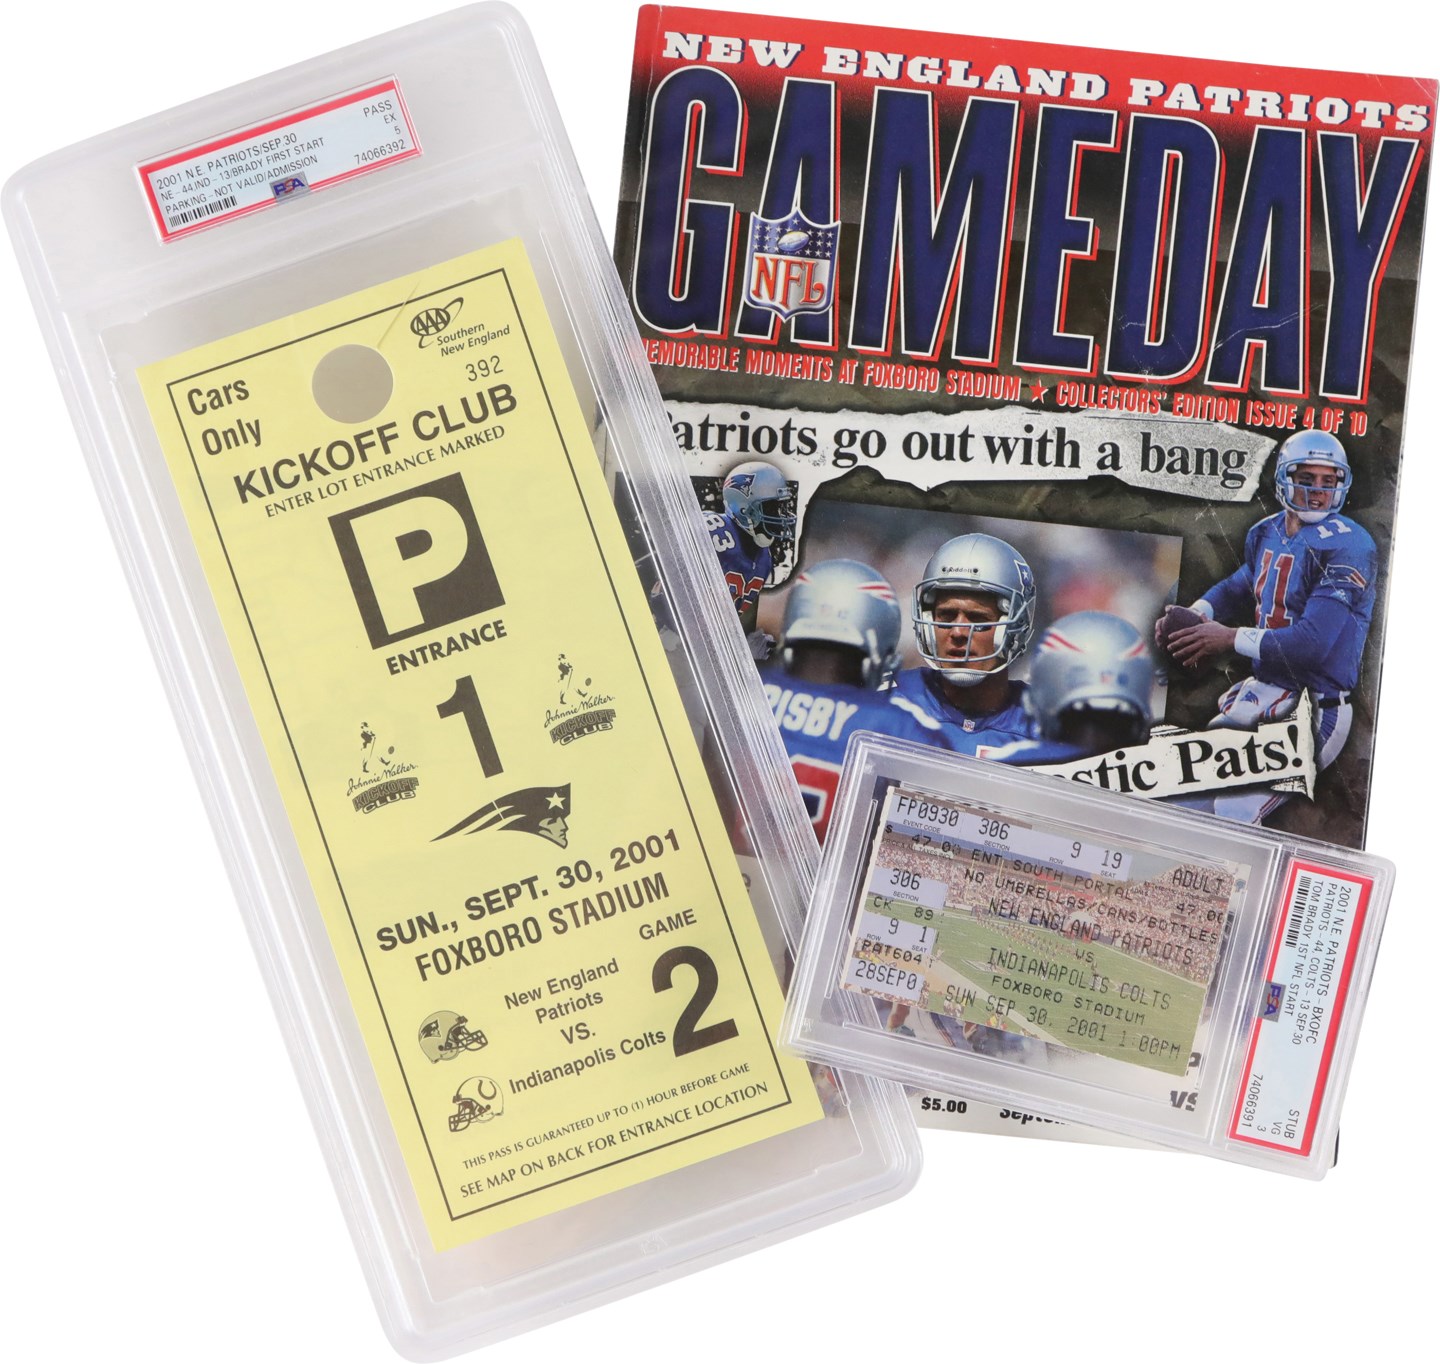 - 9/30/01 Tom Brady First Career Start Ticket Stub, Program, and Parking Pass (PSA)